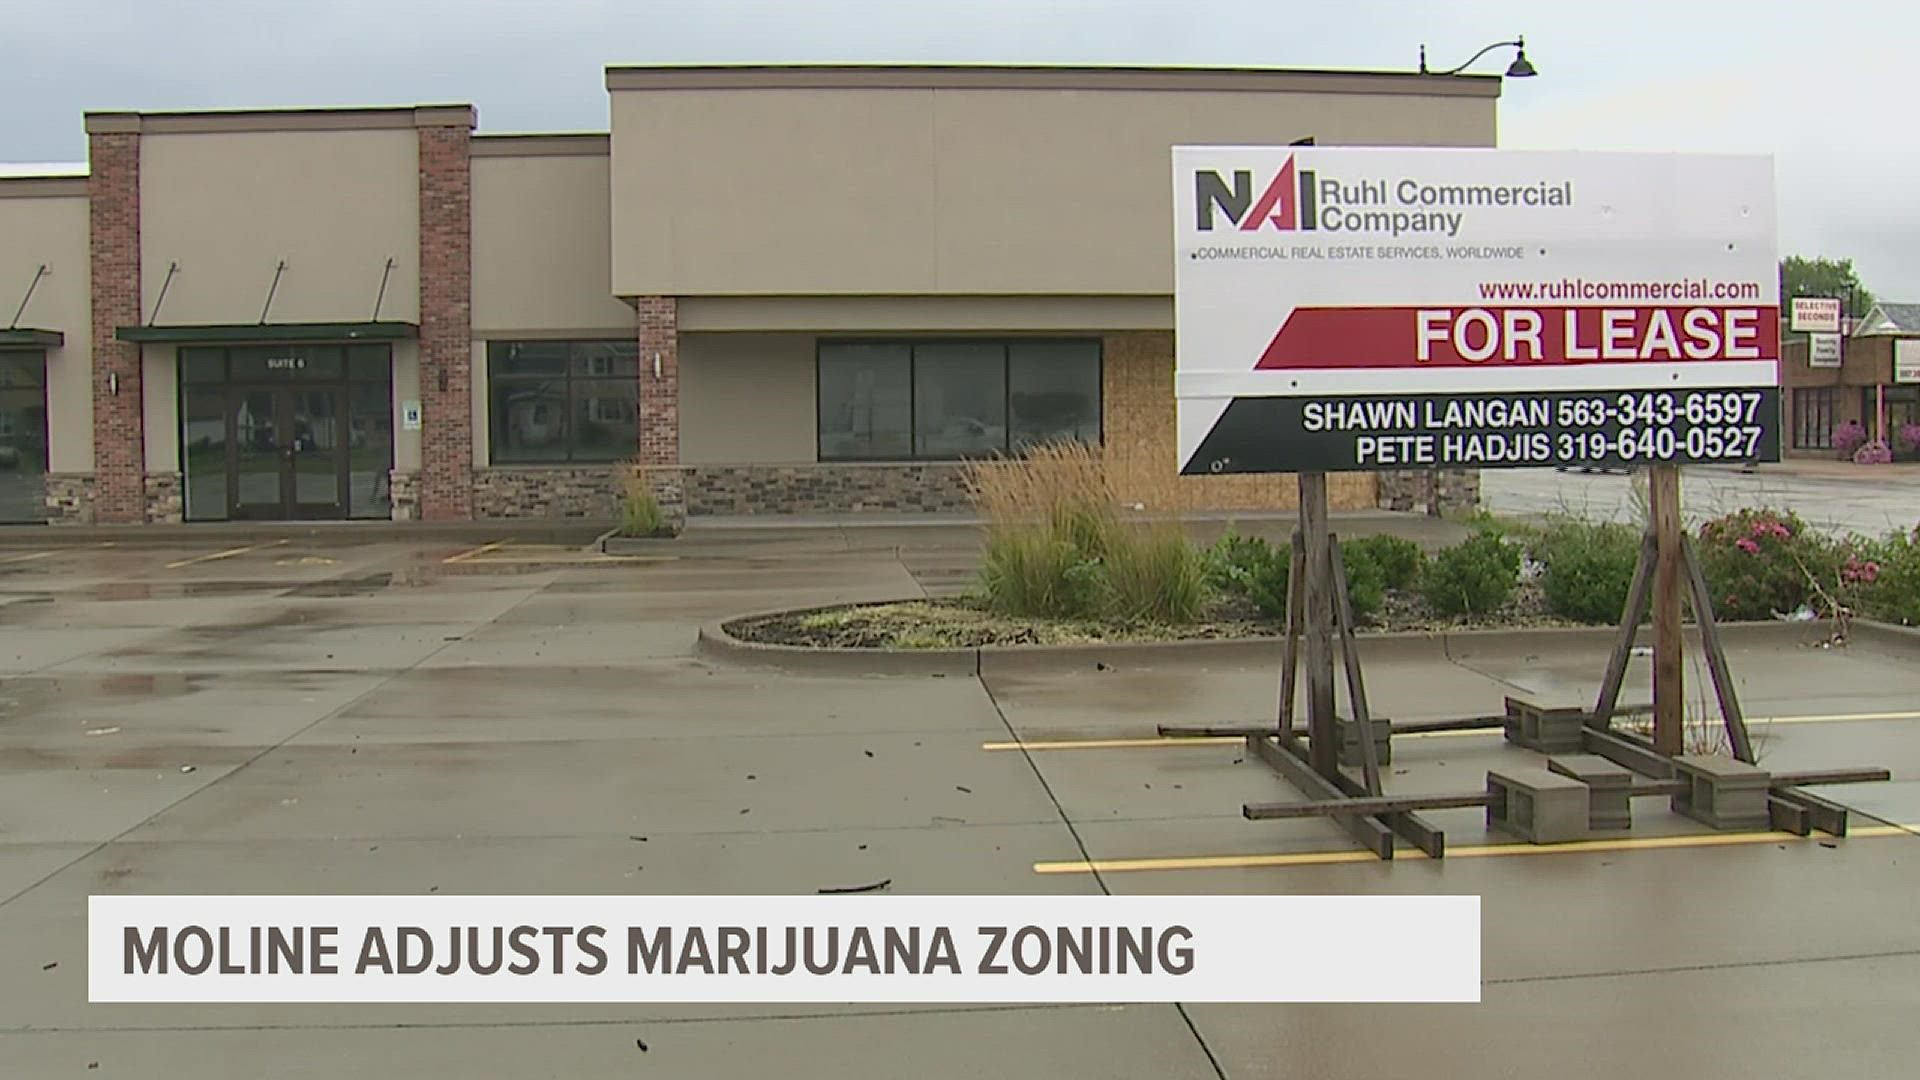 Moline updates marijuana zoning for new dispensary location